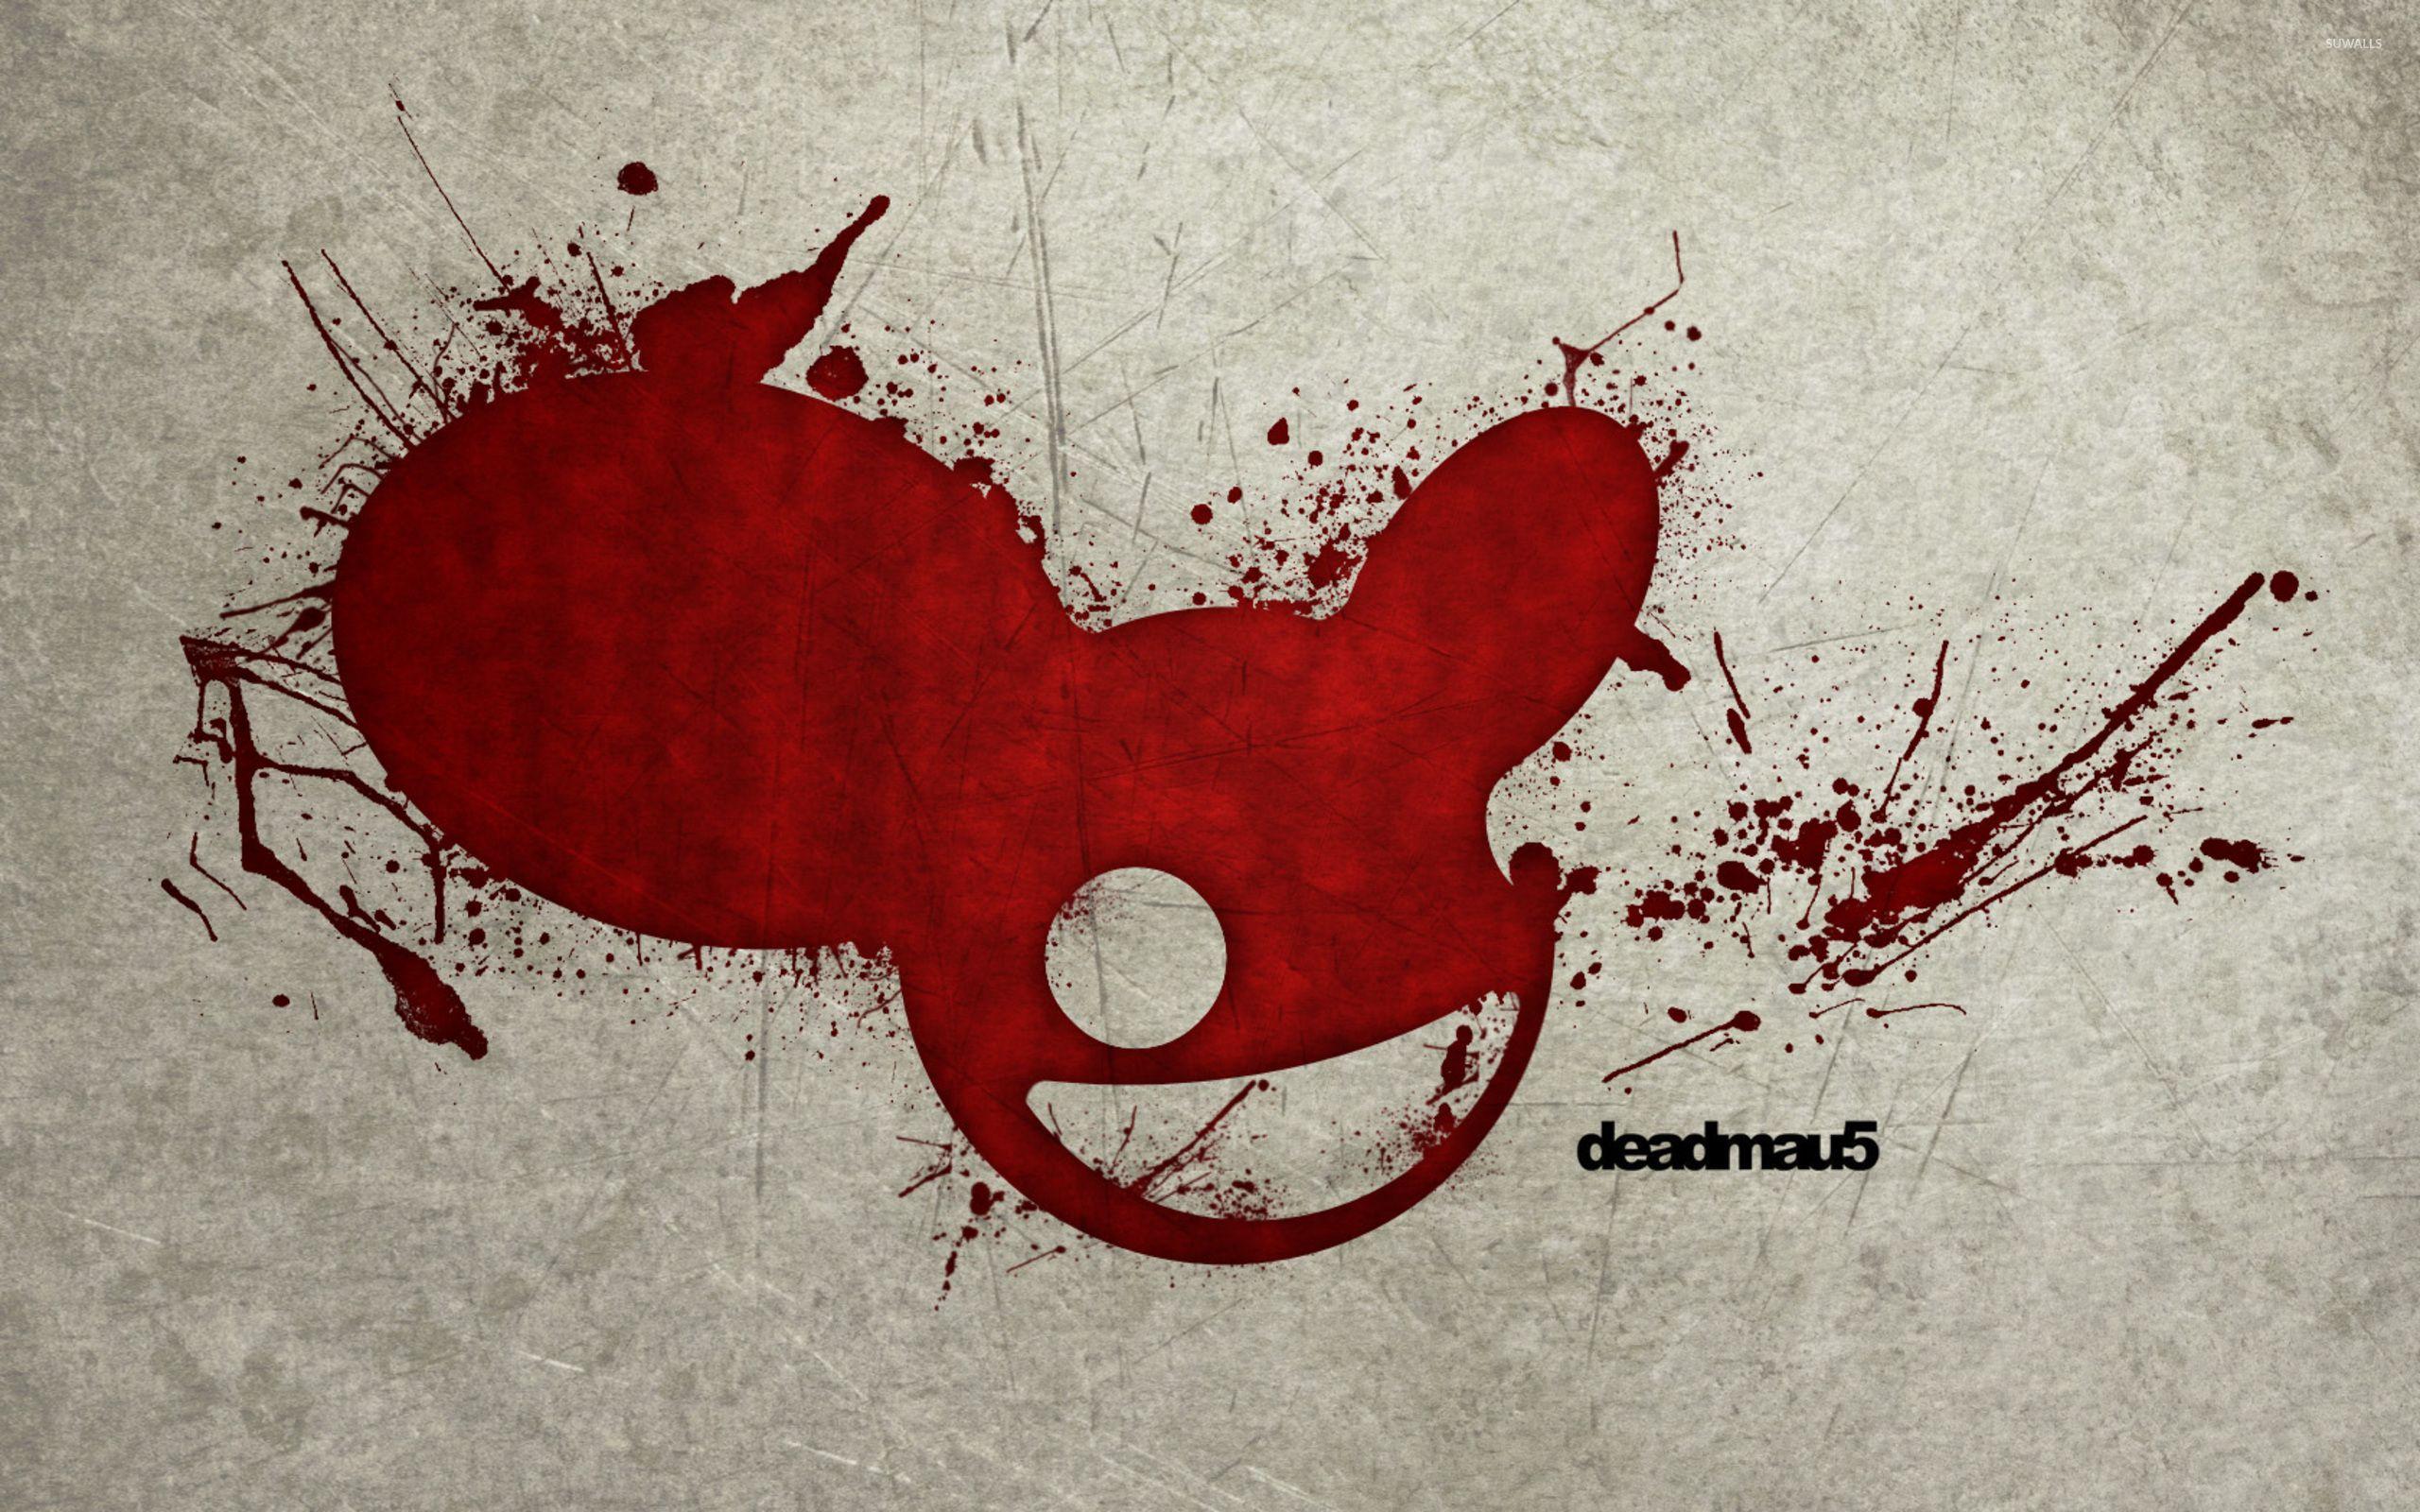 Deadmau5 [7] wallpaper wallpaper